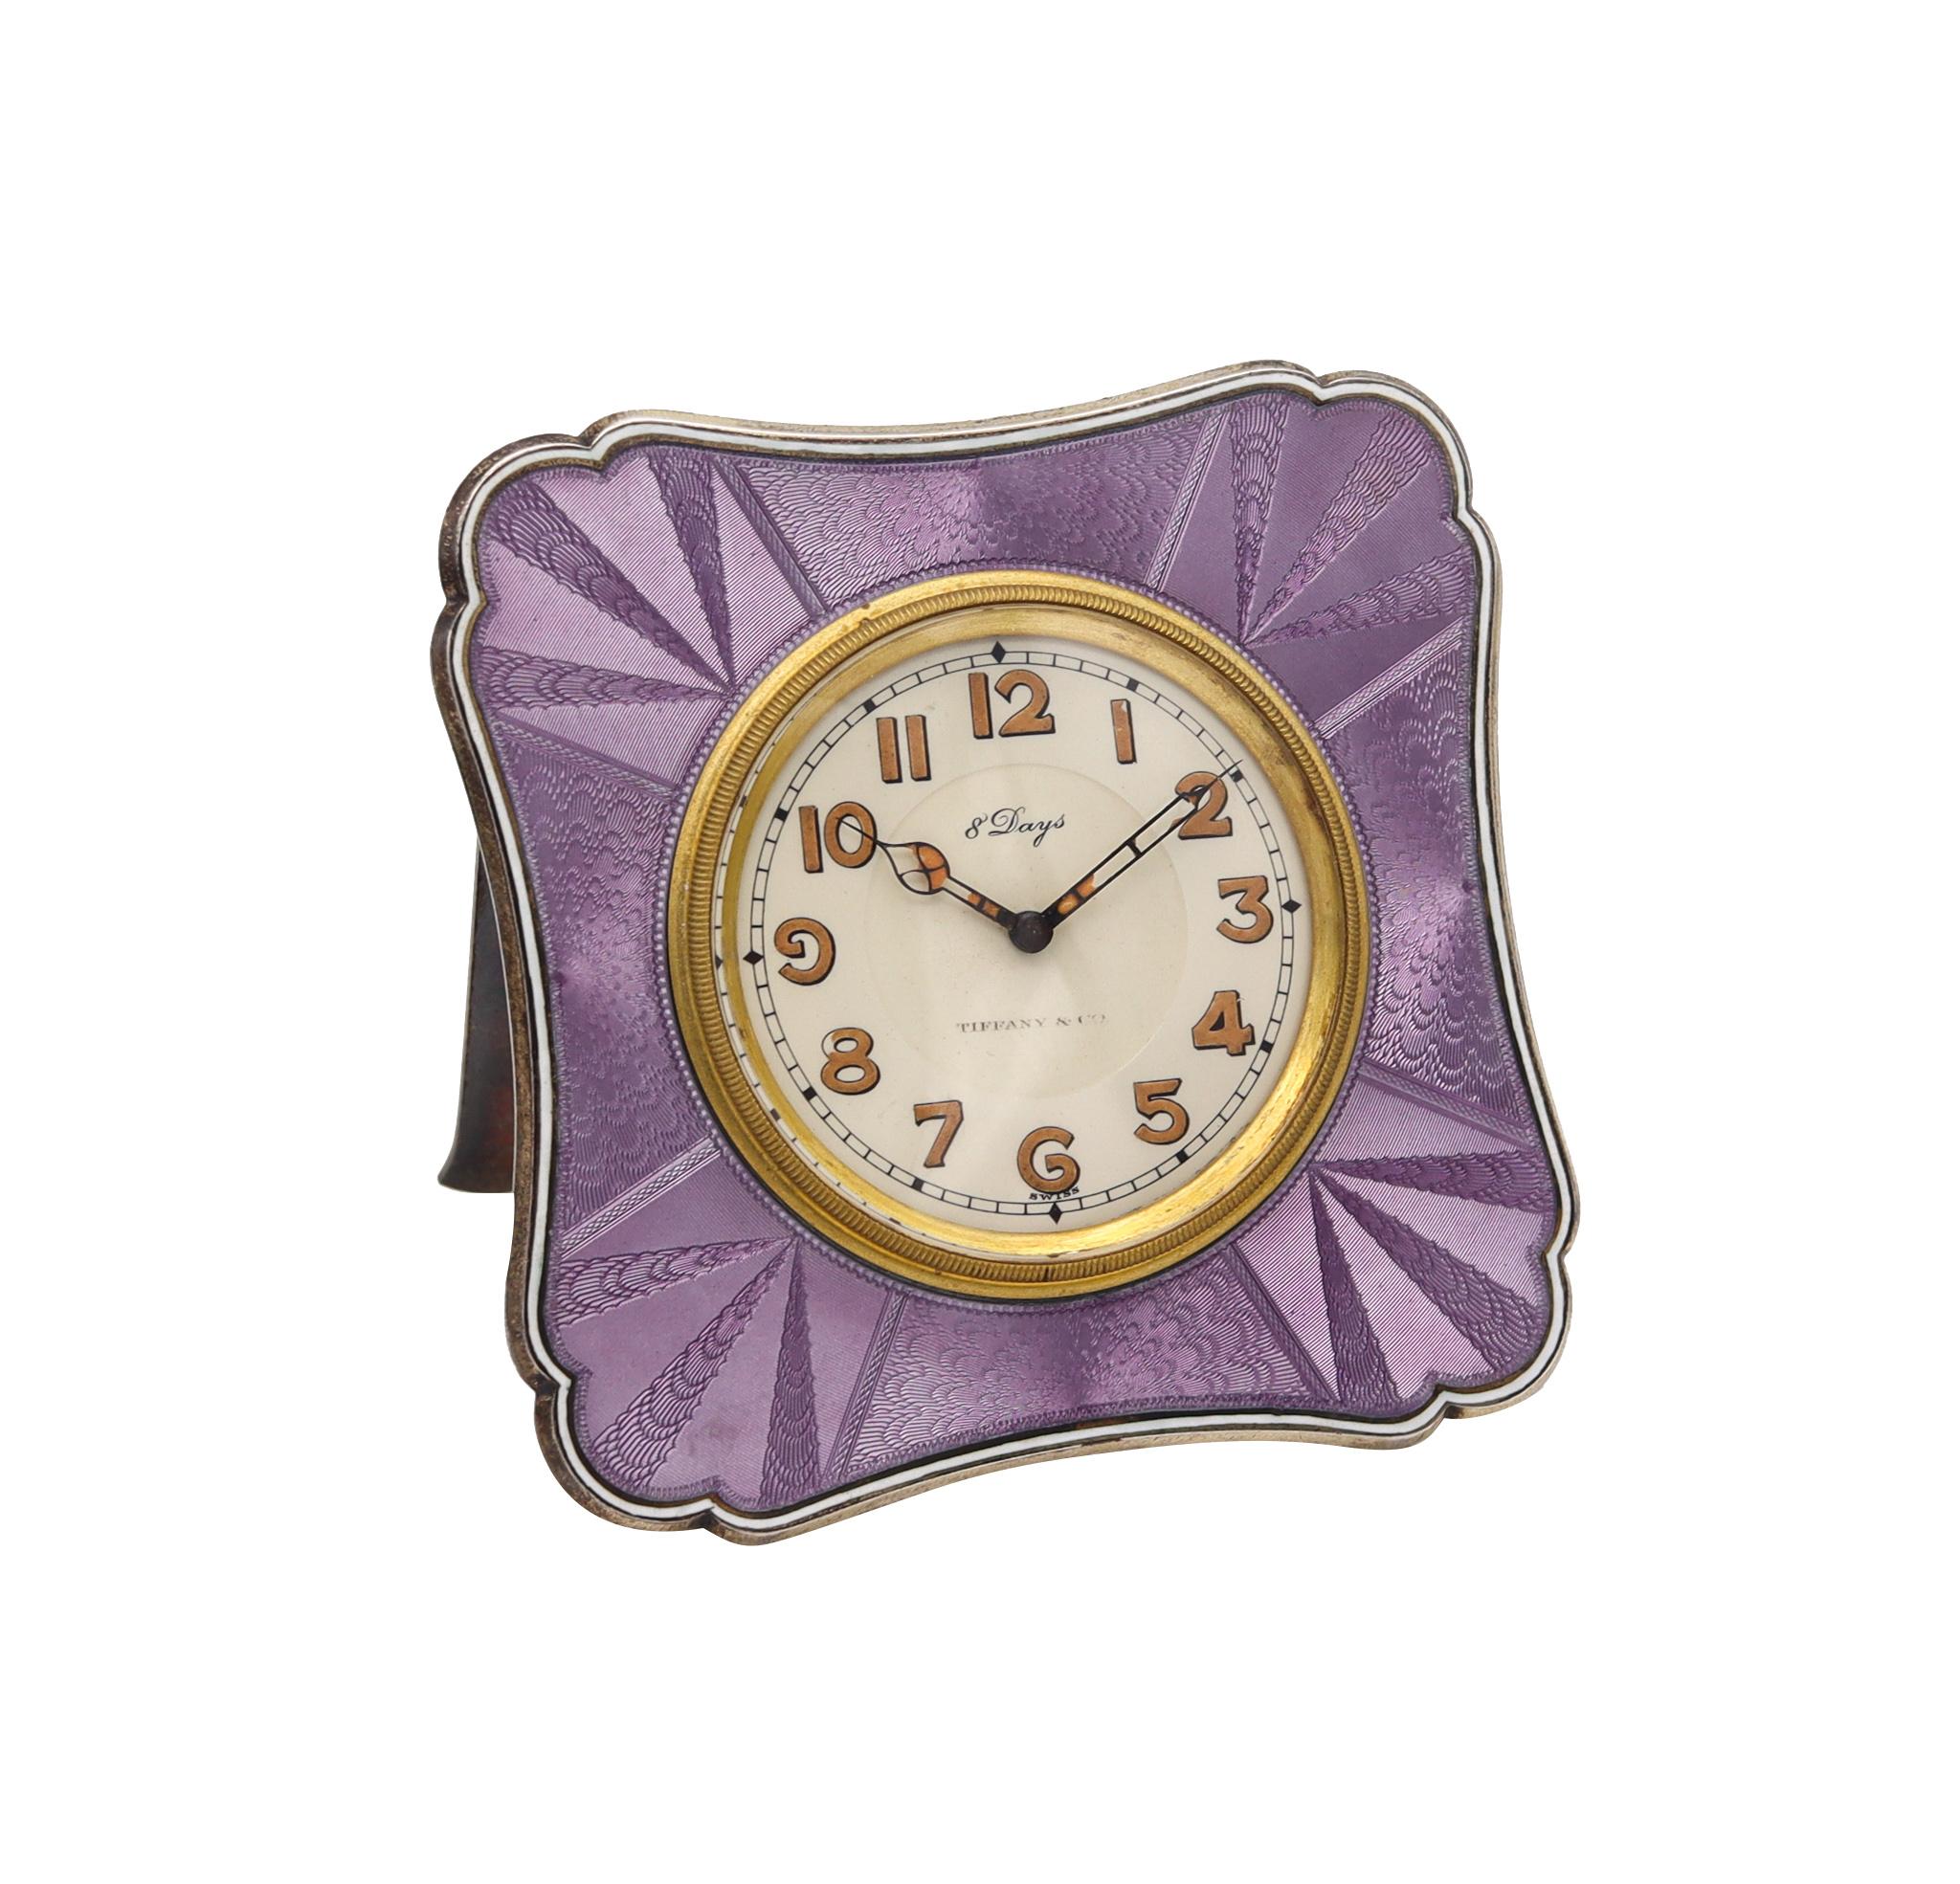 Tiffany & Co. 1920 Art Deco 8 Days Desk Clock Sterling Silver & Enamel with Box  For Sale 2